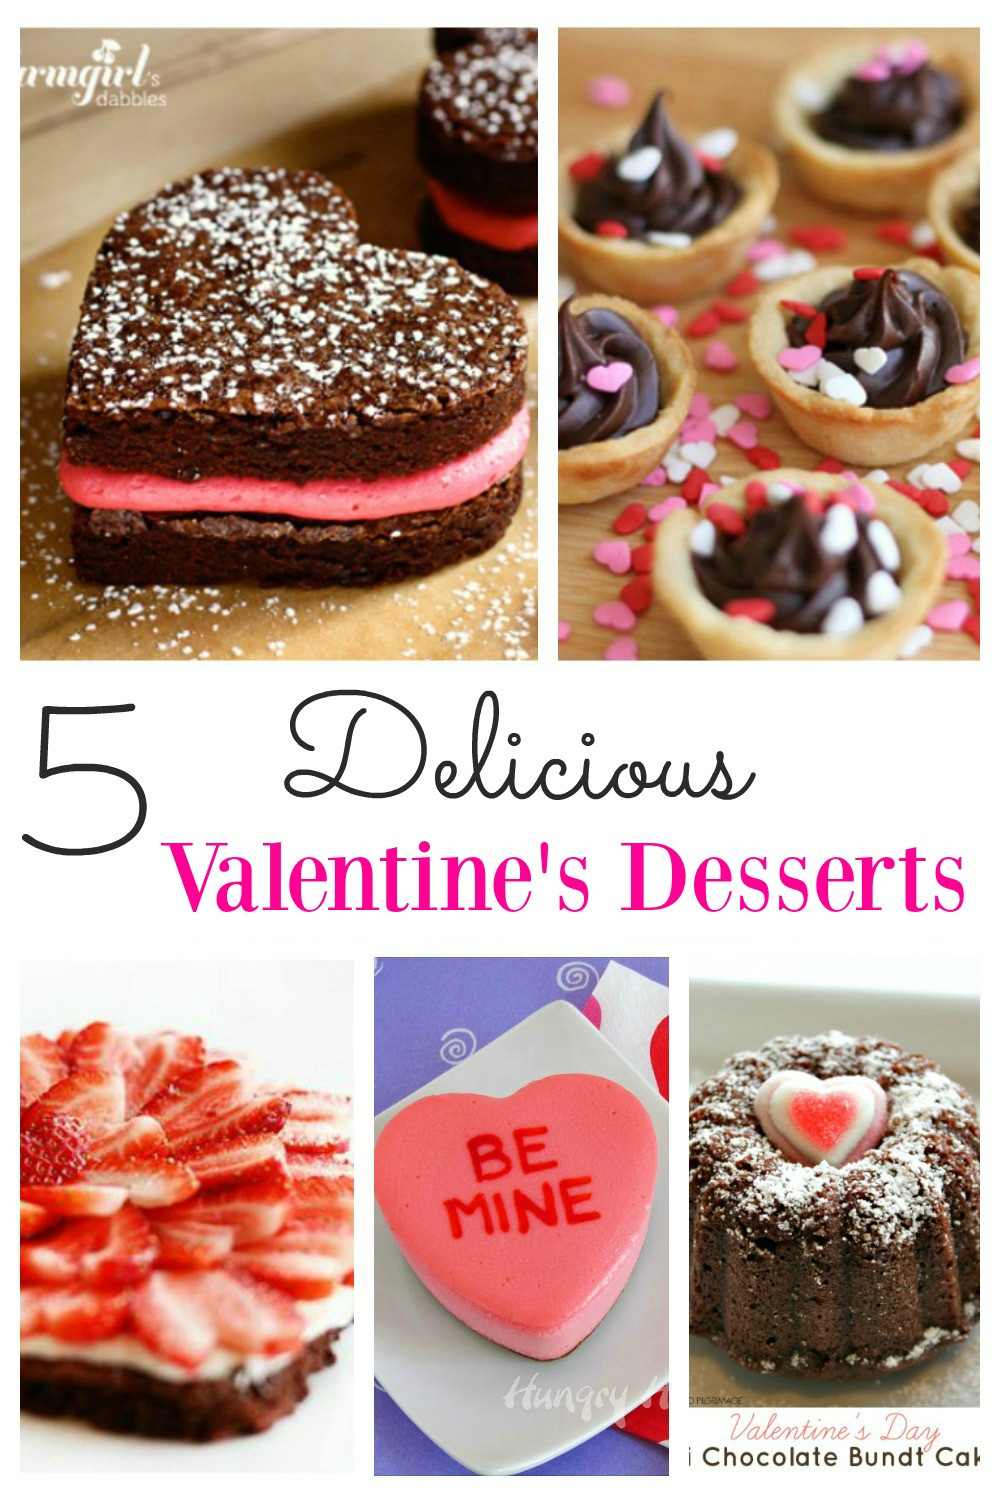 Recipes For Valentine'S Day Desserts
 Delicious Valentines Desserts